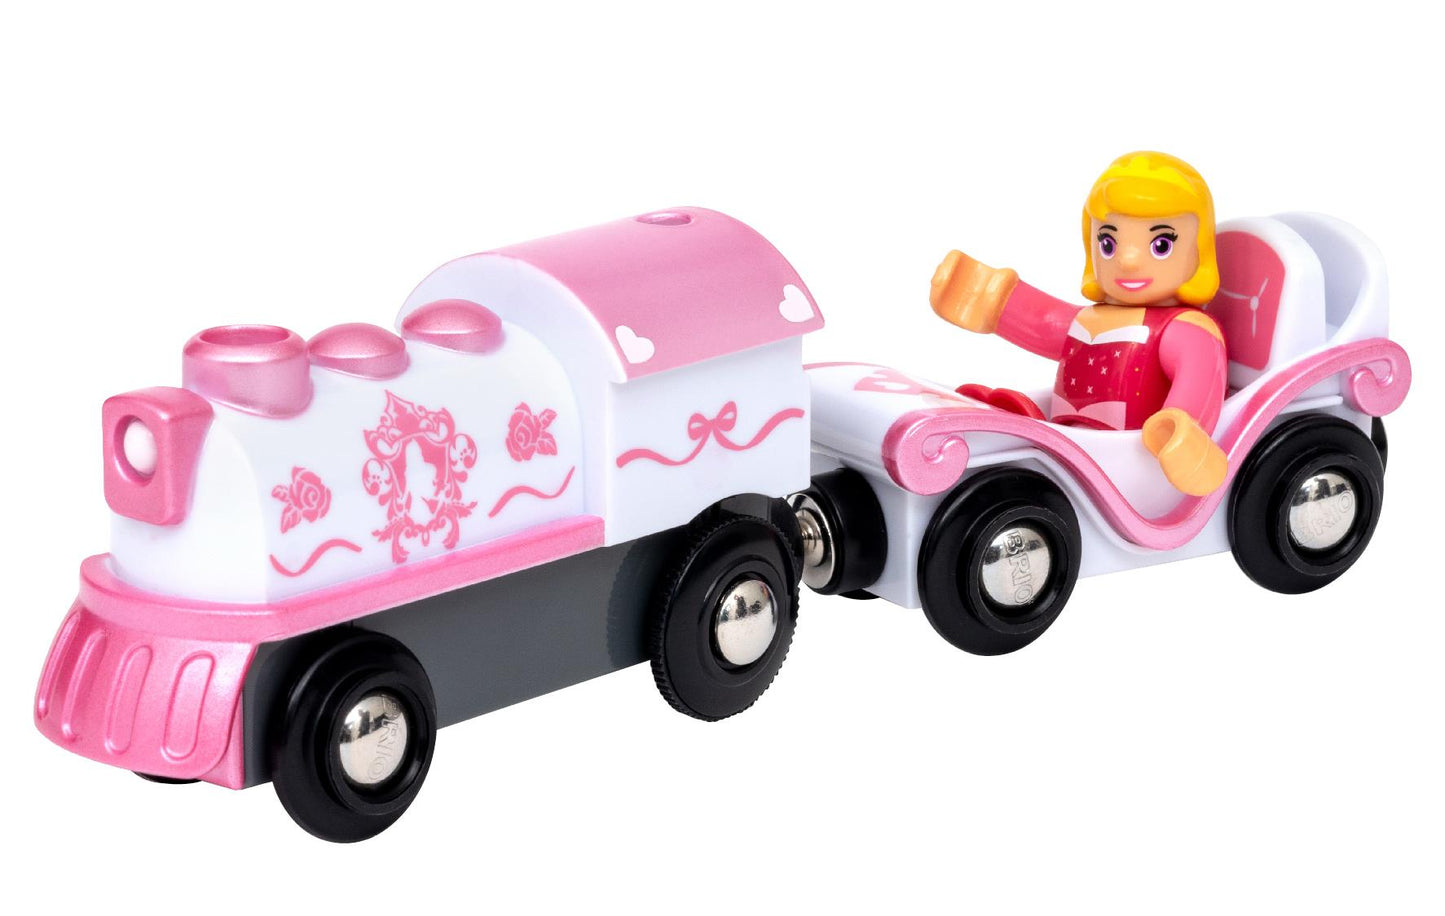 Brio Disney Princess Sleeping Beauty Battery Train